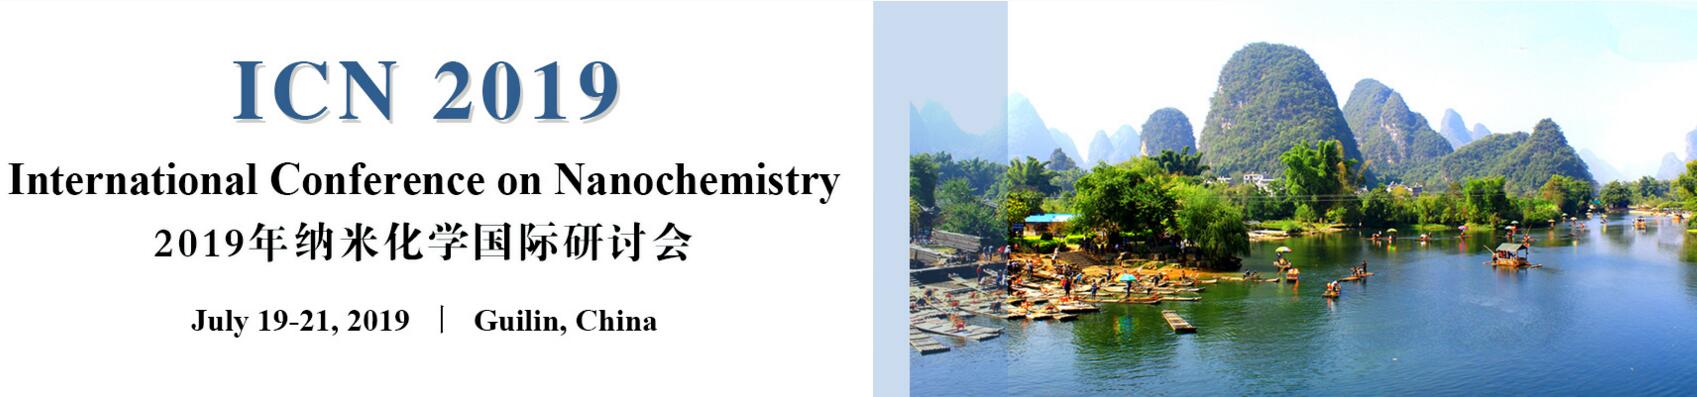 International Conference on Nanochemistry (ICN 2019), Guilin, Guangxi, China